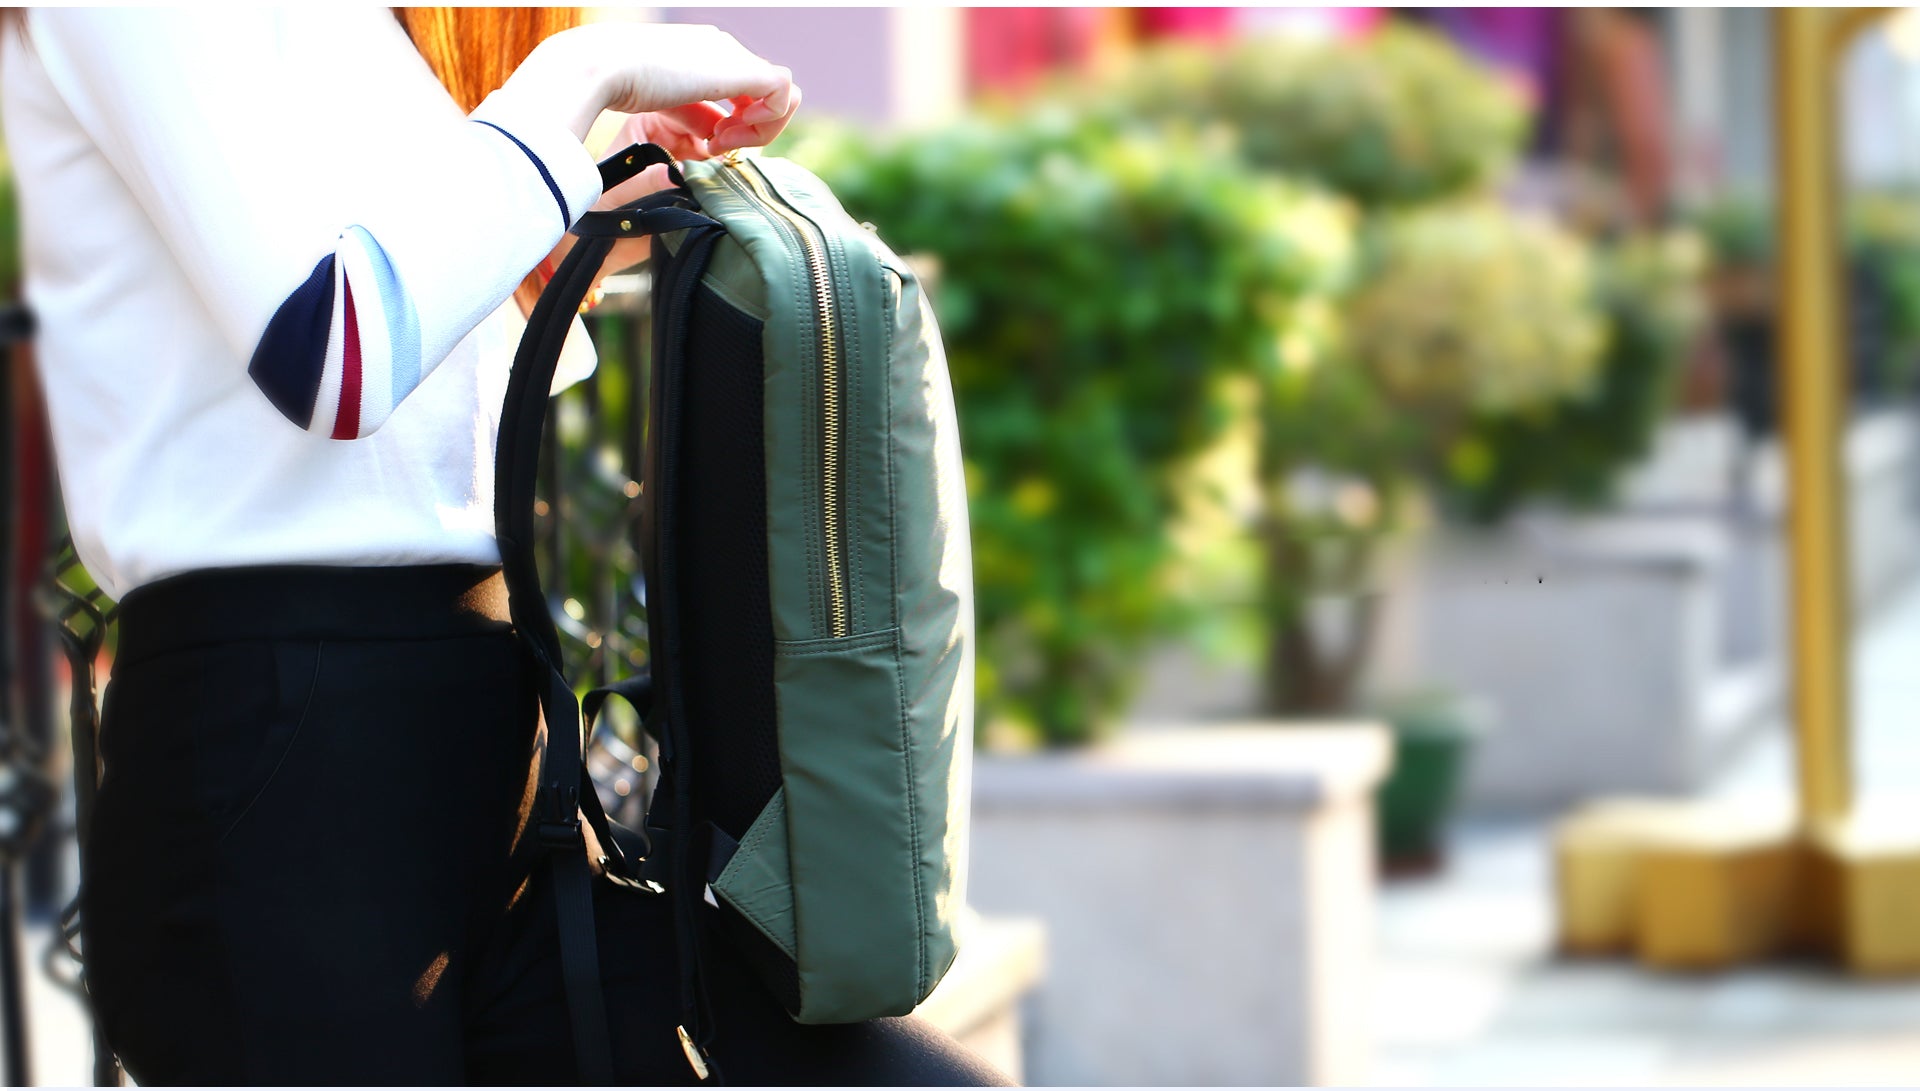 REMAX 526 DOUBLE BAG,Double Backpack Bag,Modern Backpacks,Simple Backpack,Insulated Backpack for Laptop,Fashion Backpack, Unique Backpack,Canvas Backpack,Student Backpack,Cool Backpack for Boys,Girls,Men,Women,School Bag